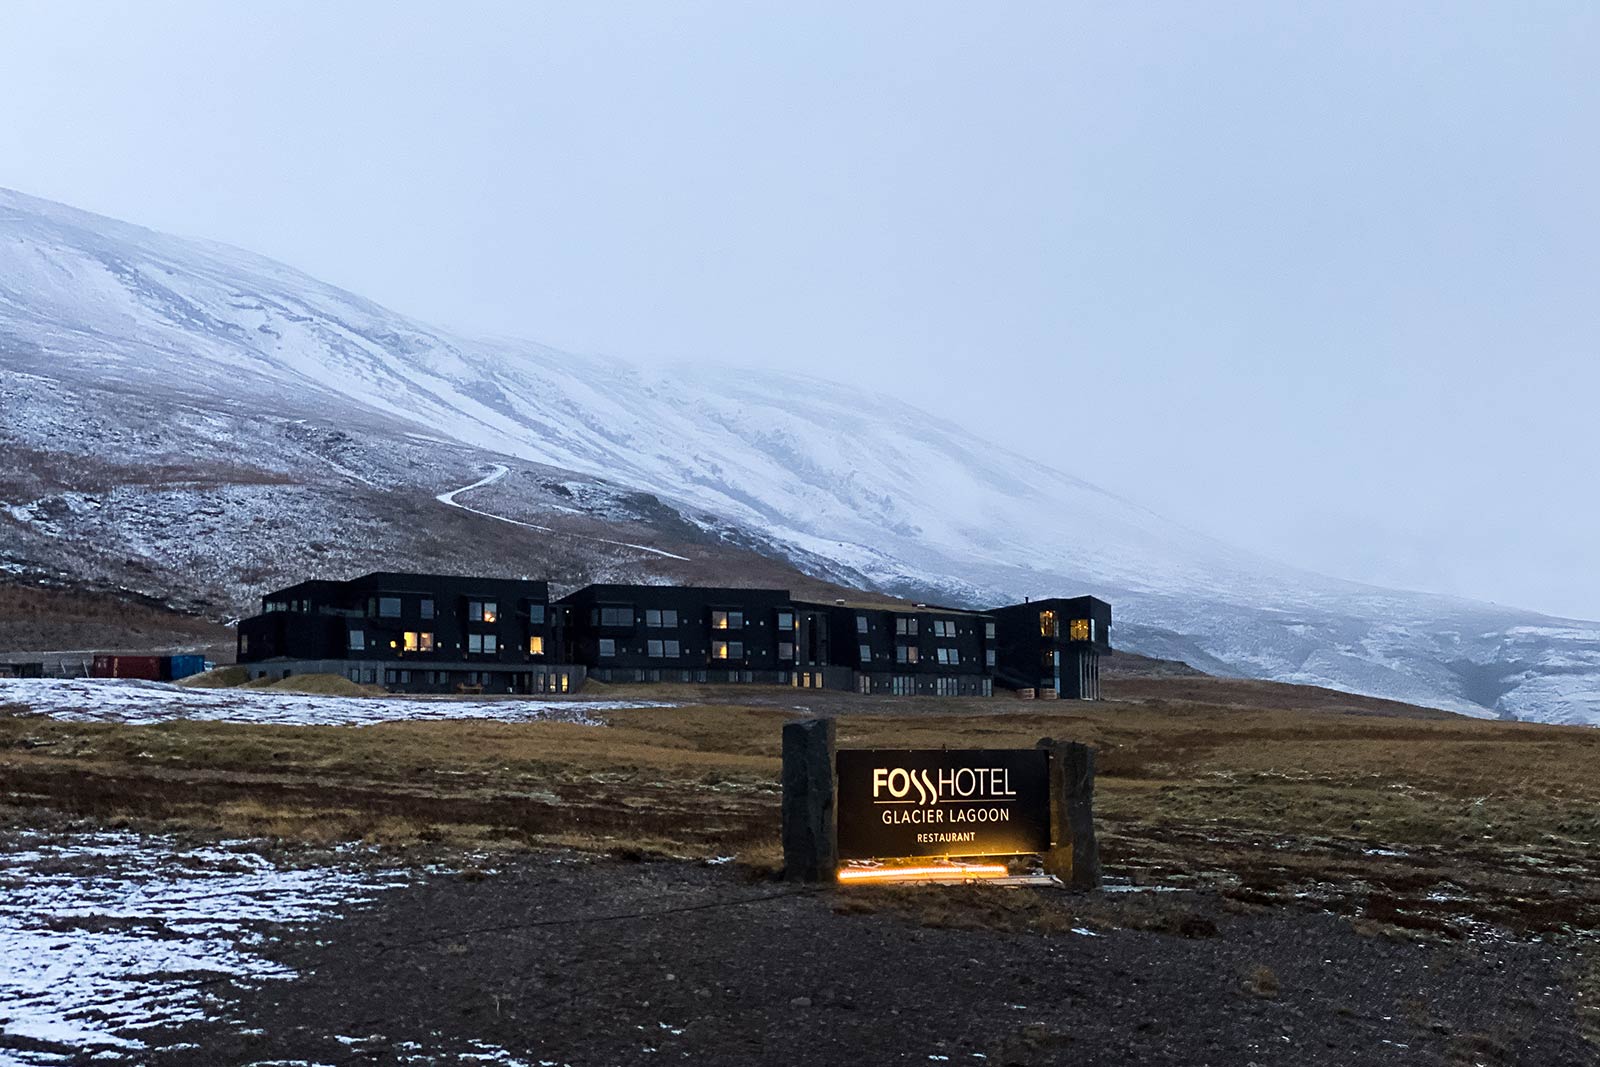 Foss Hotel in Iceland. Waking up in a winter wonderland